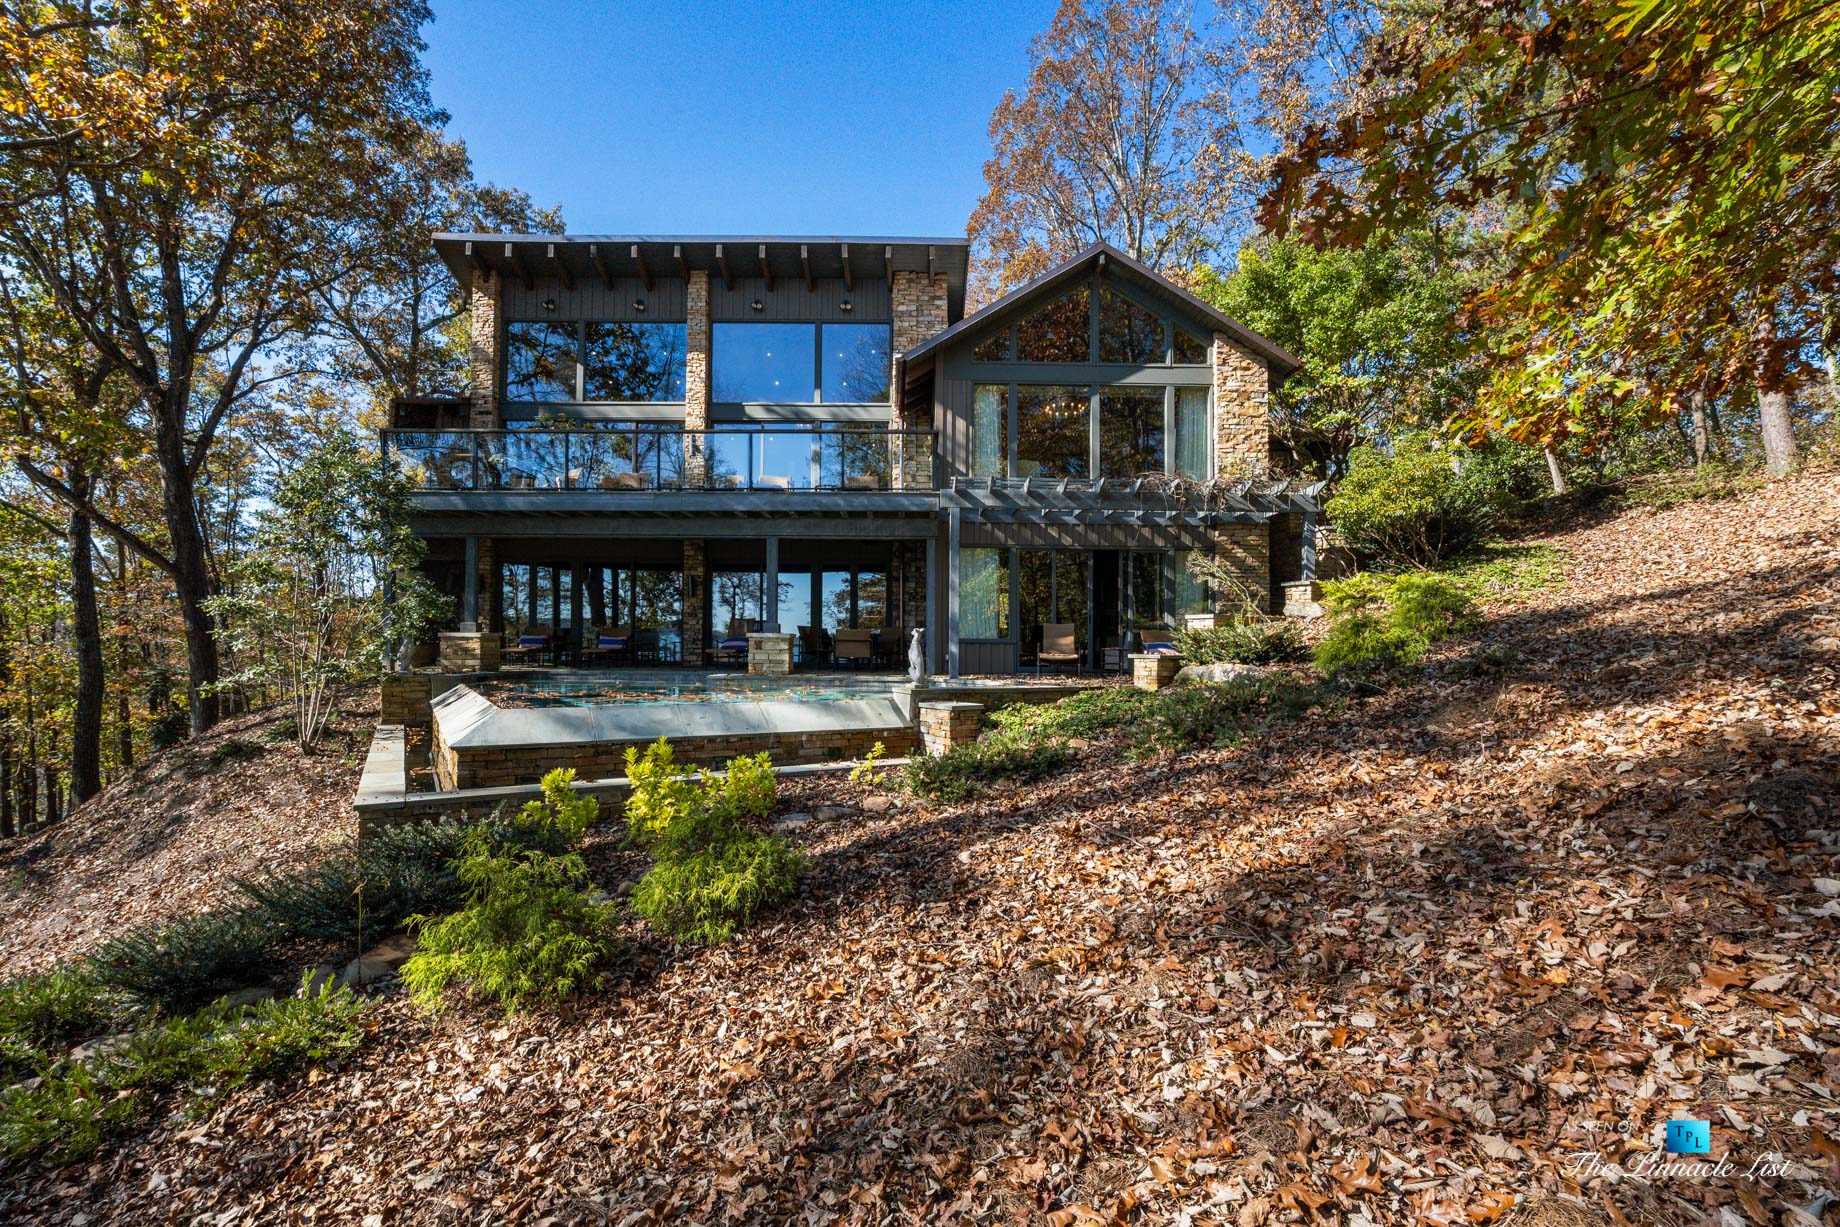 7860 Chestnut Hill Rd, Cumming, GA, USA - Pool View - Luxury Real Estate - Lake Lanier Mid-Century Modern Stone Home